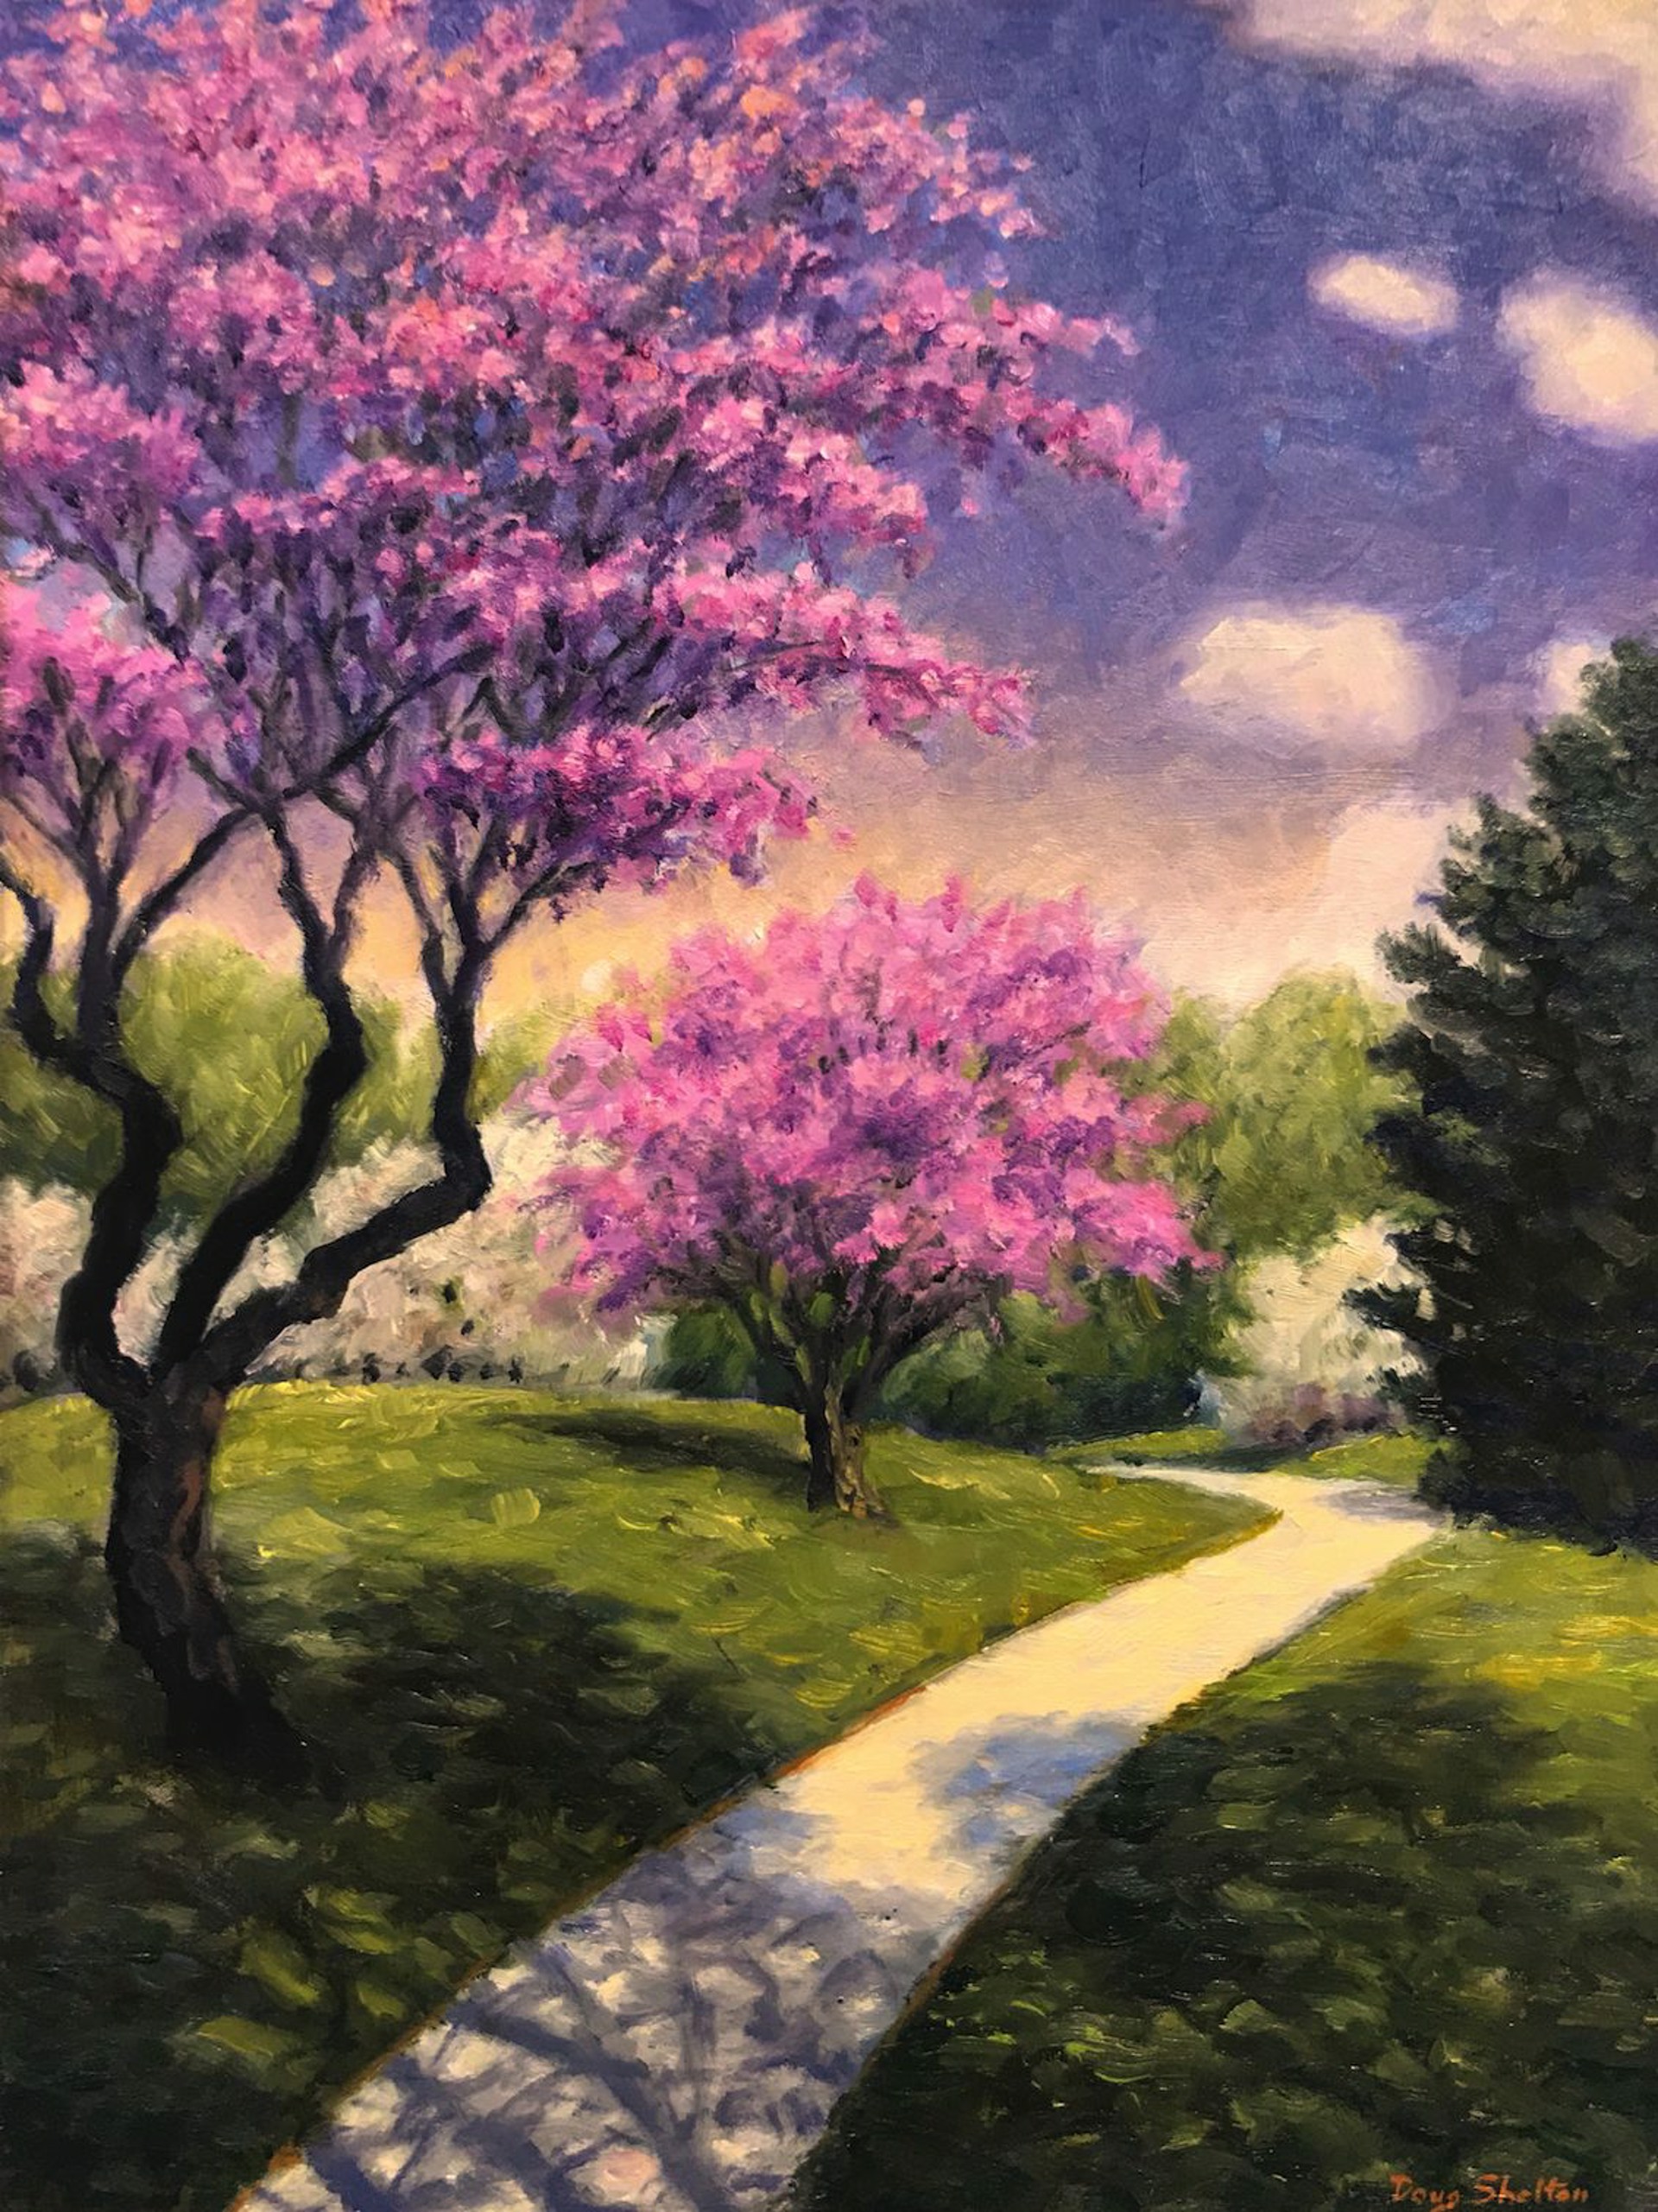 Spring Walk by Doug Shelton